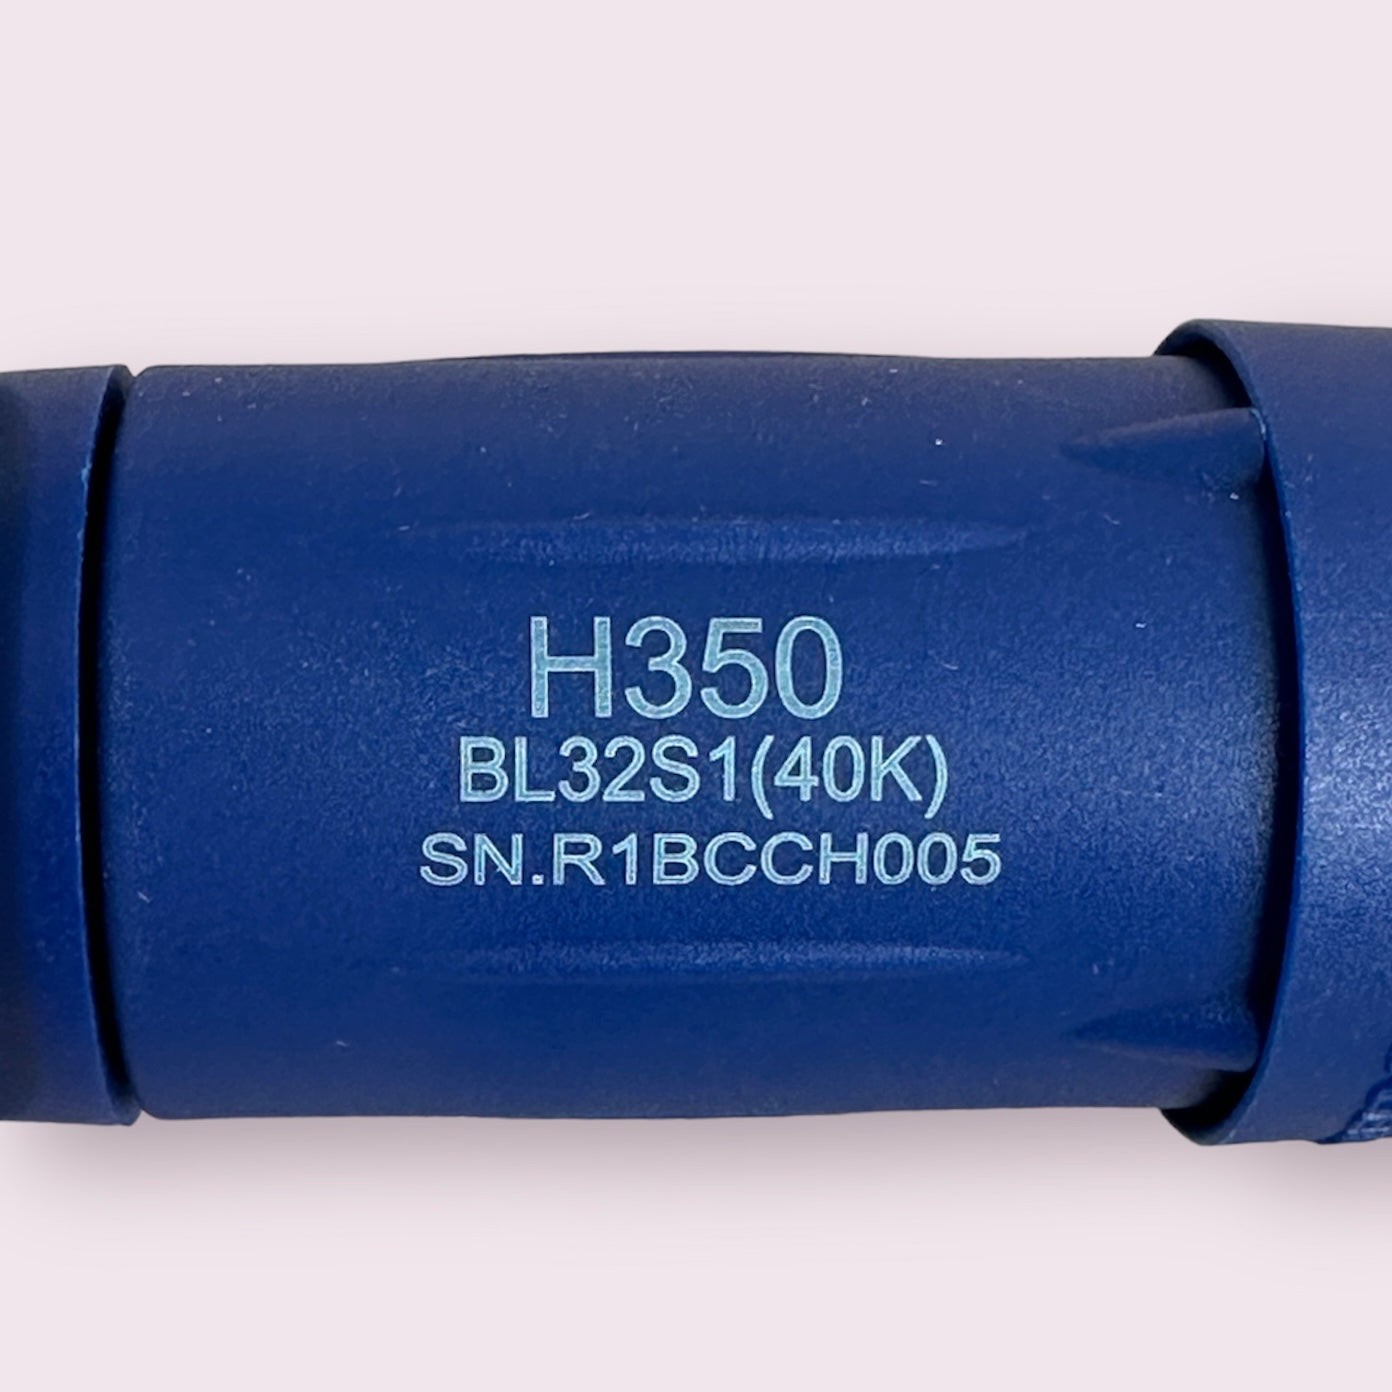 Micro Motor Handpiece H350 (BLUE) by SAESHIN, 40K RPM, Korea